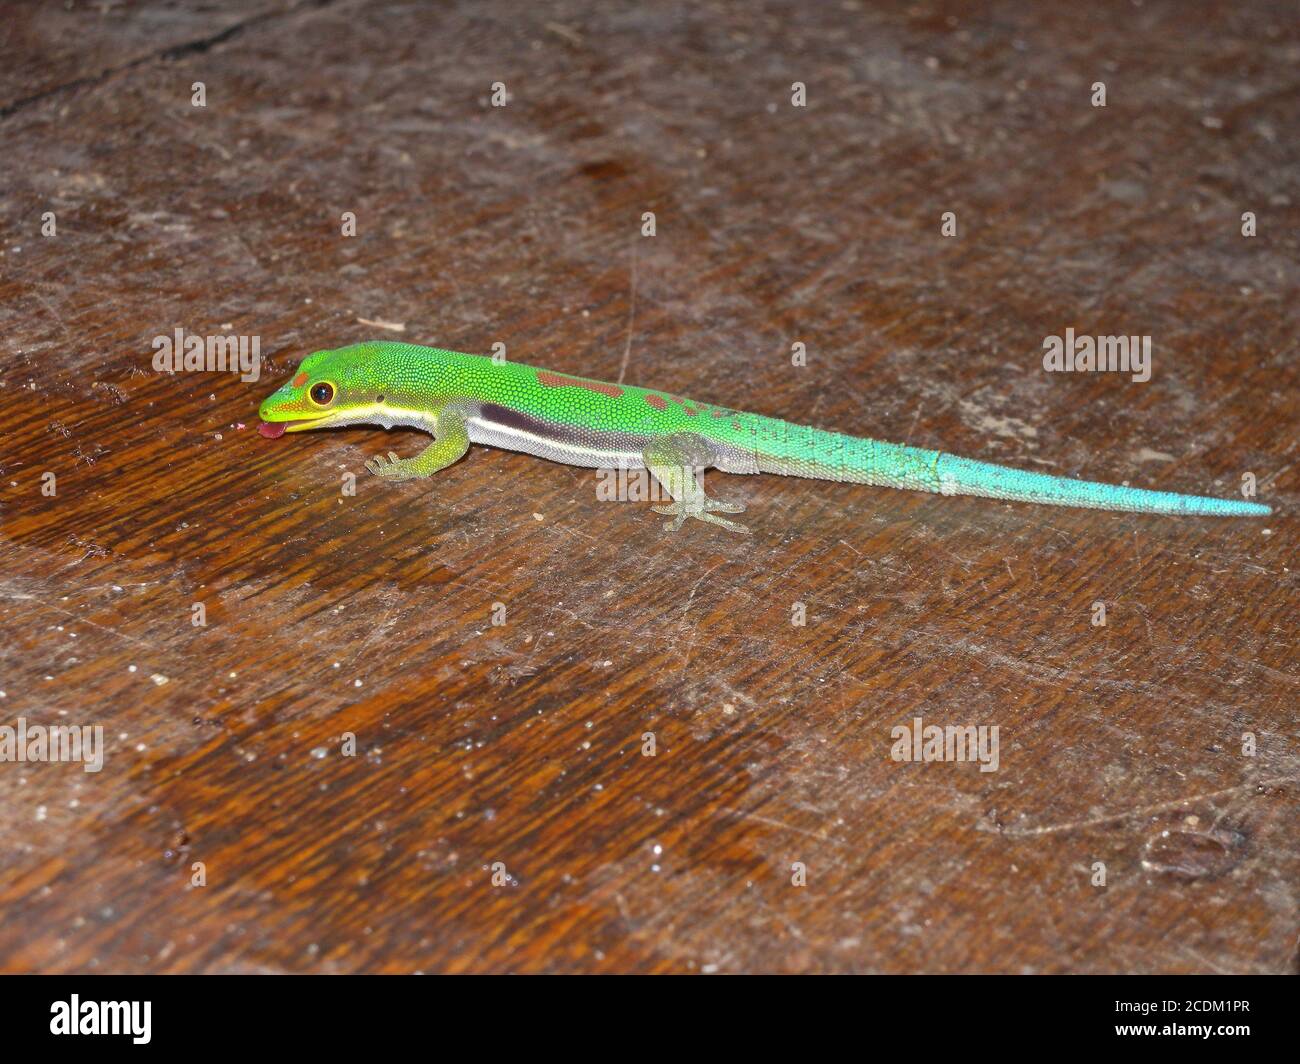 Lesser Day Gecko (Phelsuma pusilla), eating scraps from a table in a restaurant, Madagascar, Masoala Stock Photo